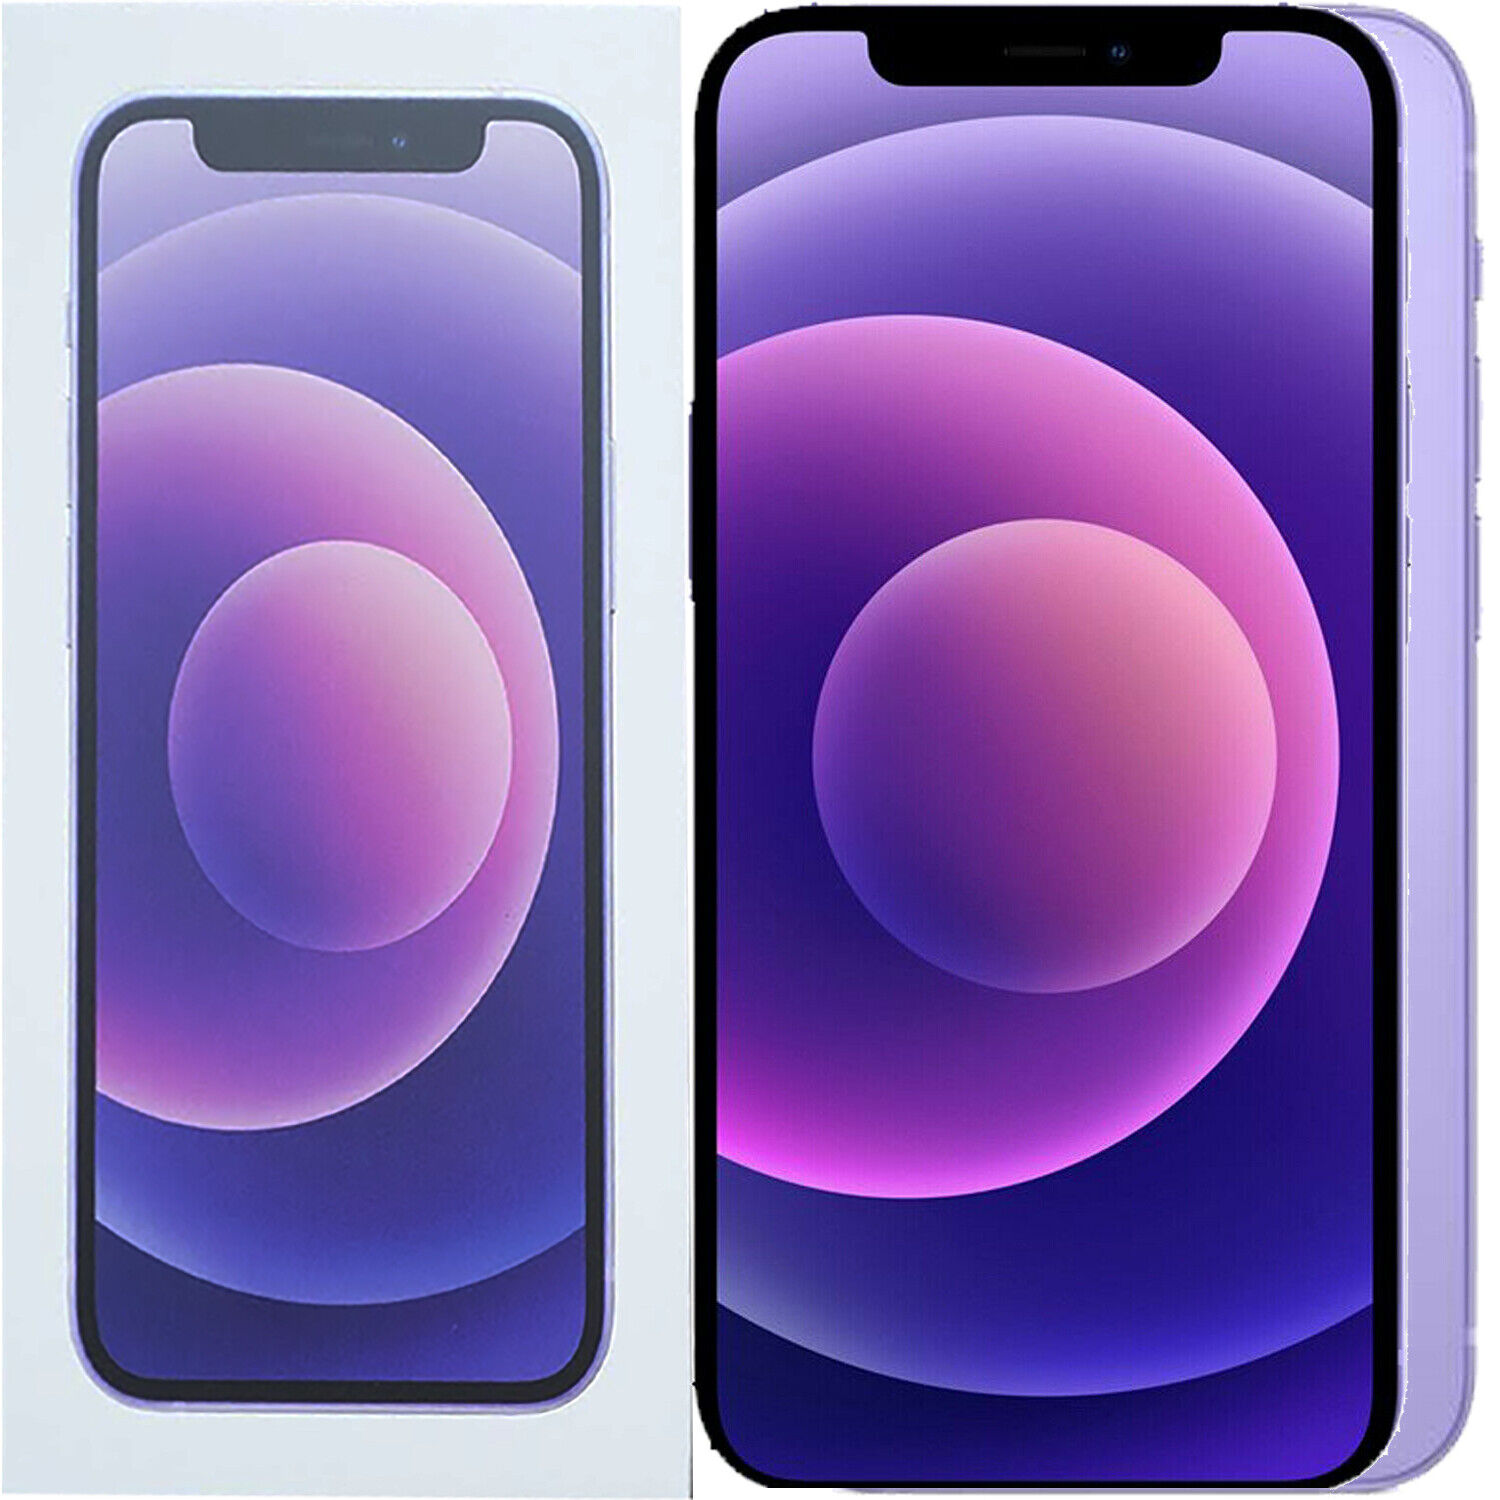 BNIB Apple iPhone 12 Dual SIM 128GB + 4GB Purple Factory Unlocked 5G GSM